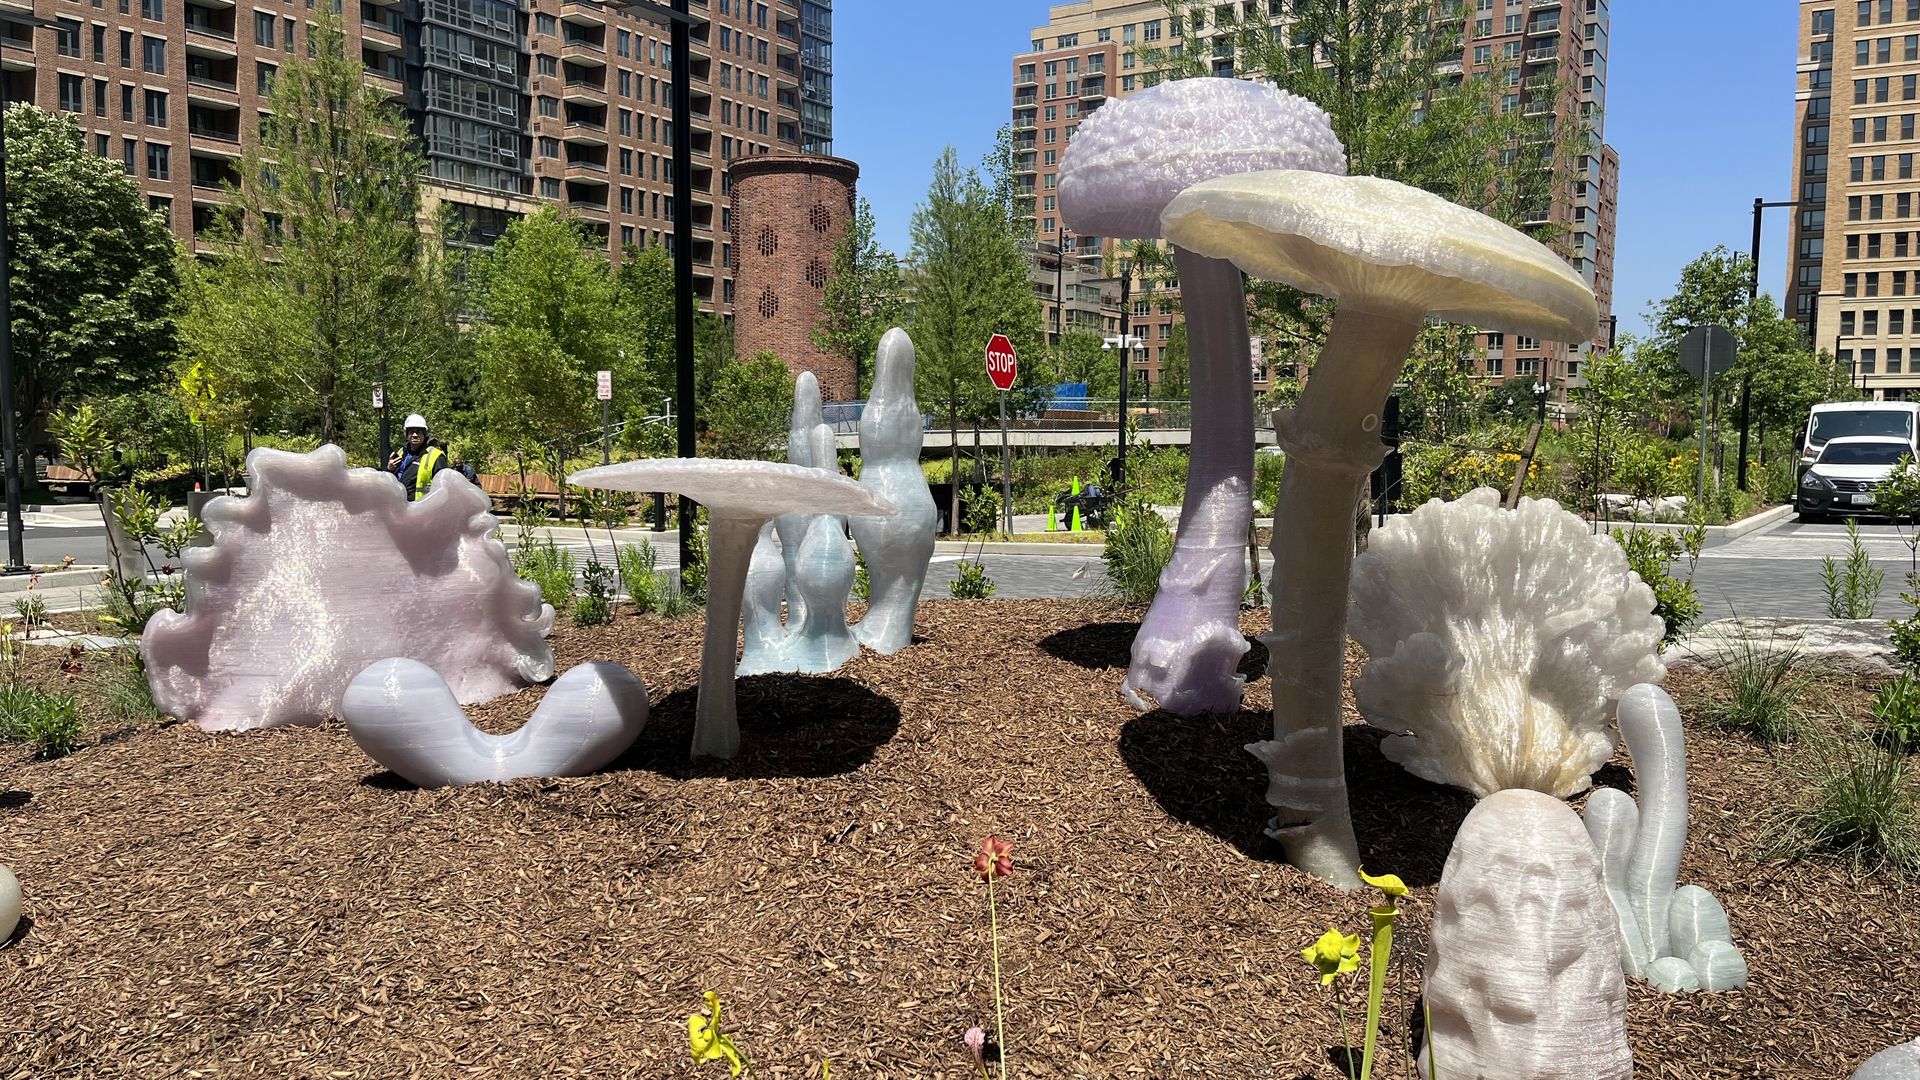 Mushroom sculptures